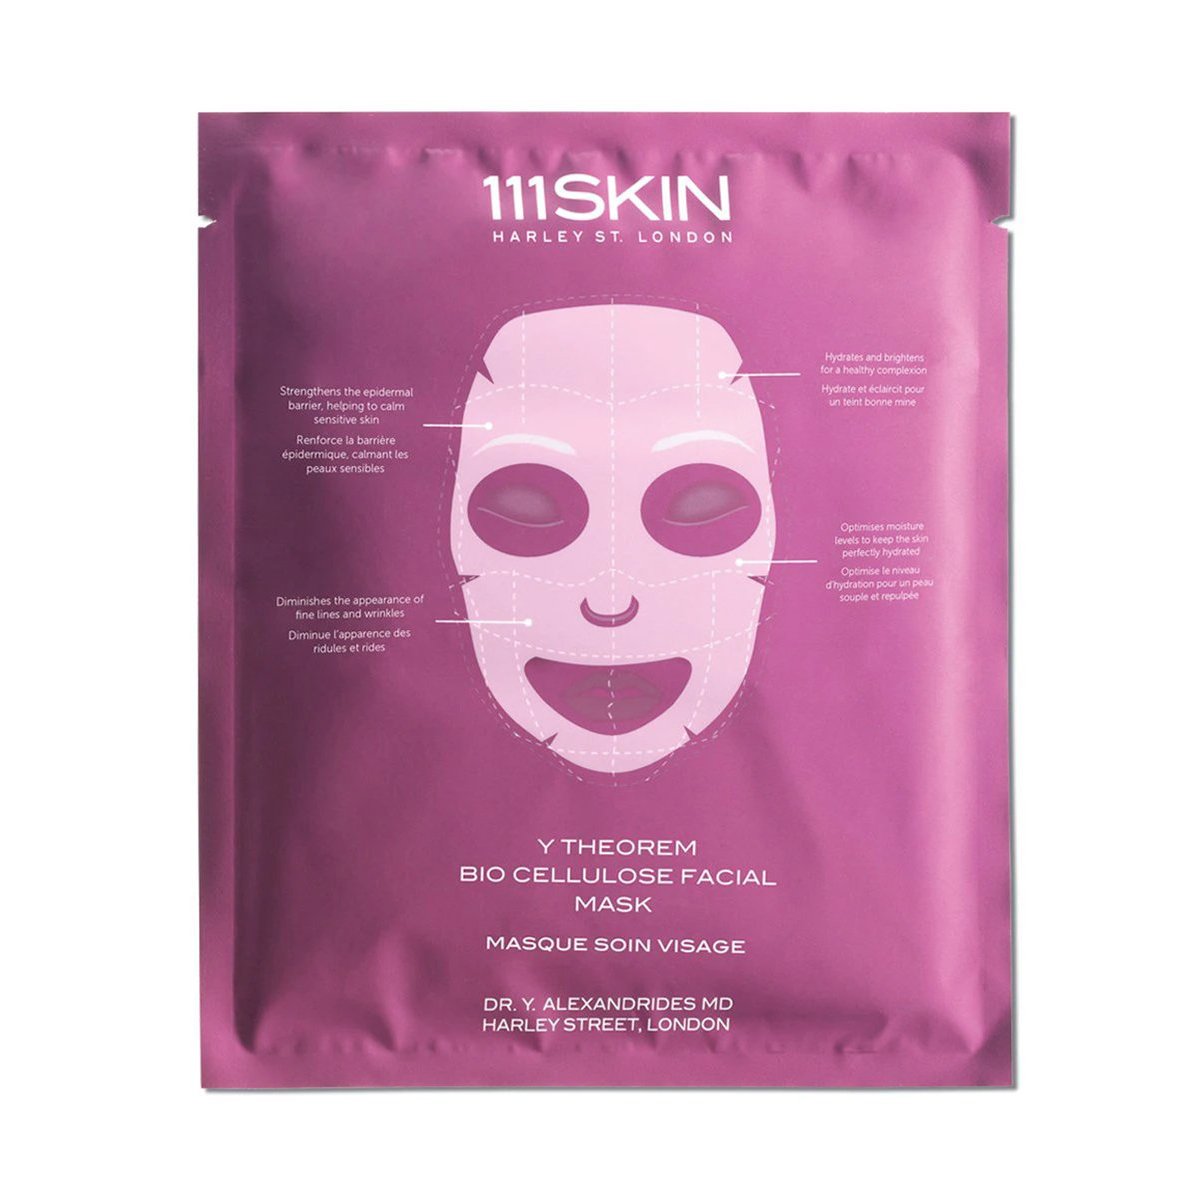 Y Theorem Bio Celulose Facial Mask 111Skin